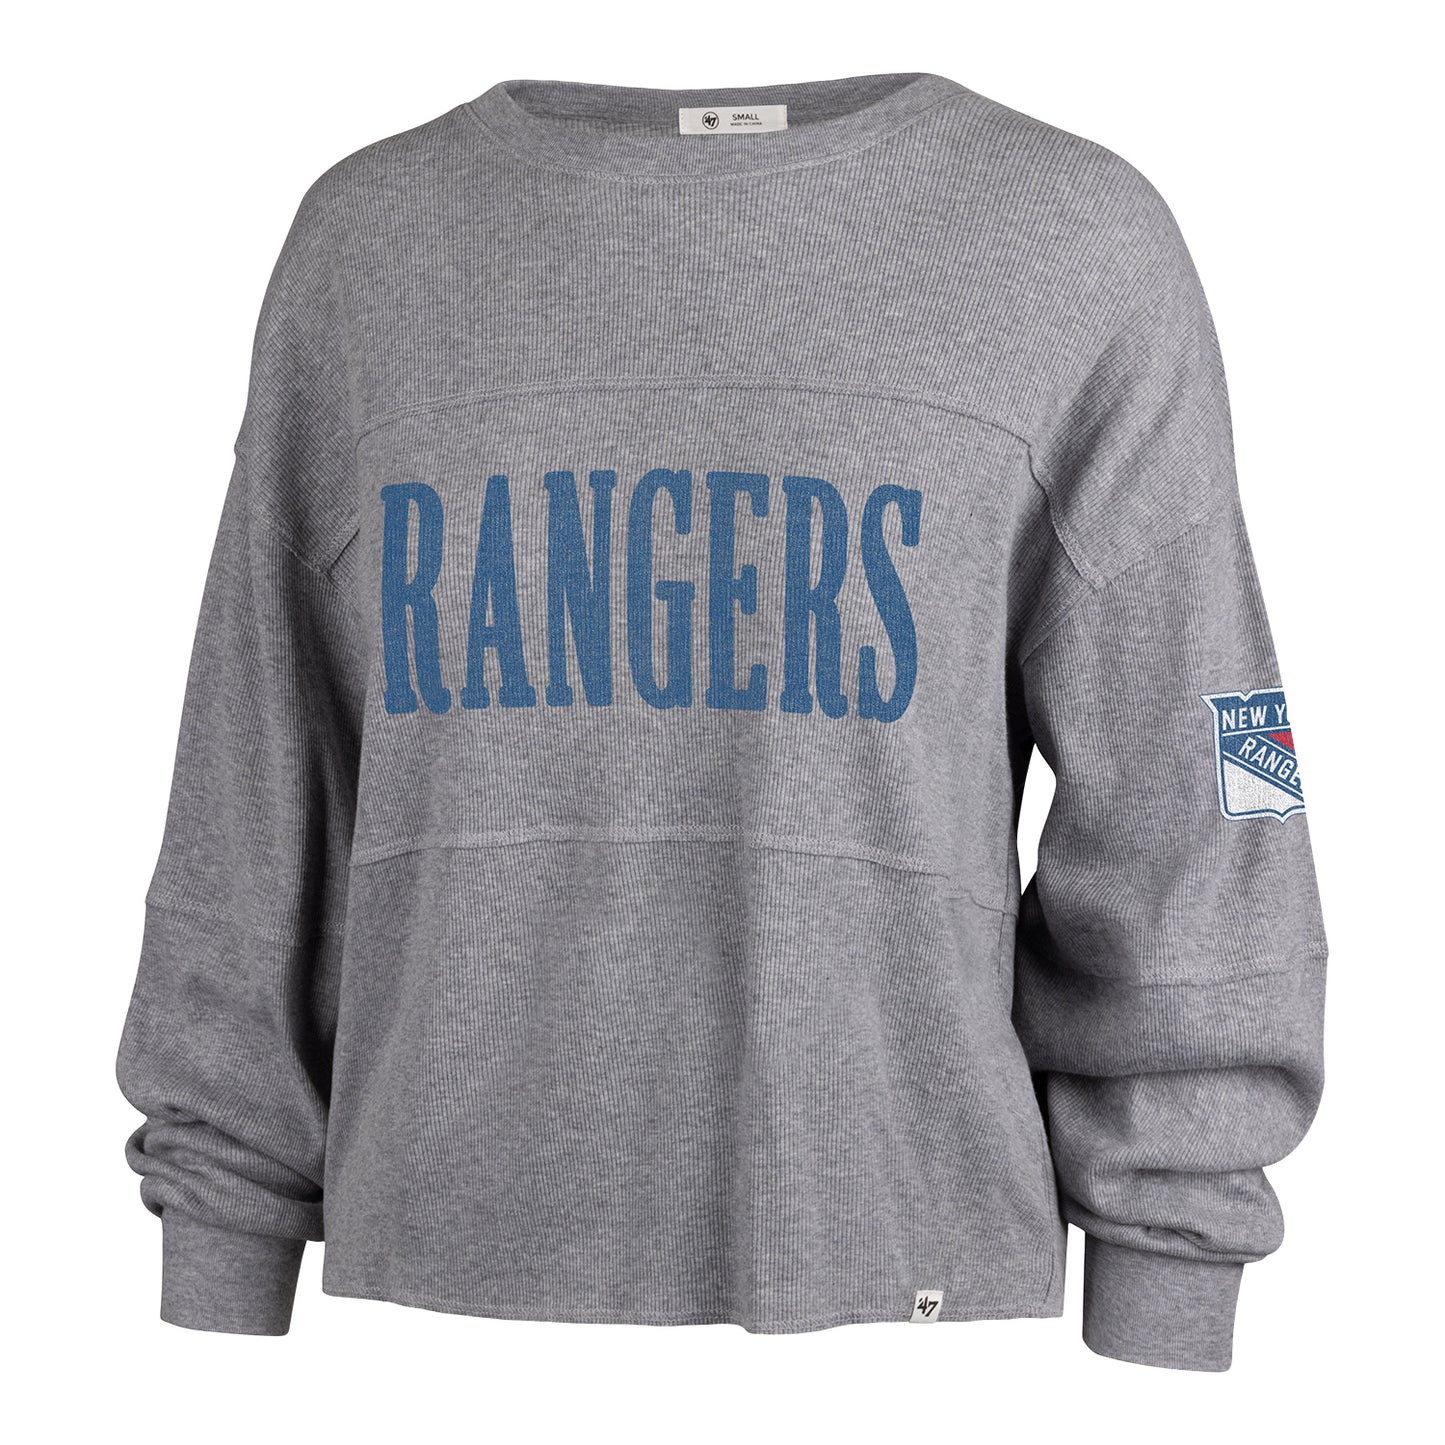 Women's '47 Brand Rangers Jada Longsleeve T-Shirt